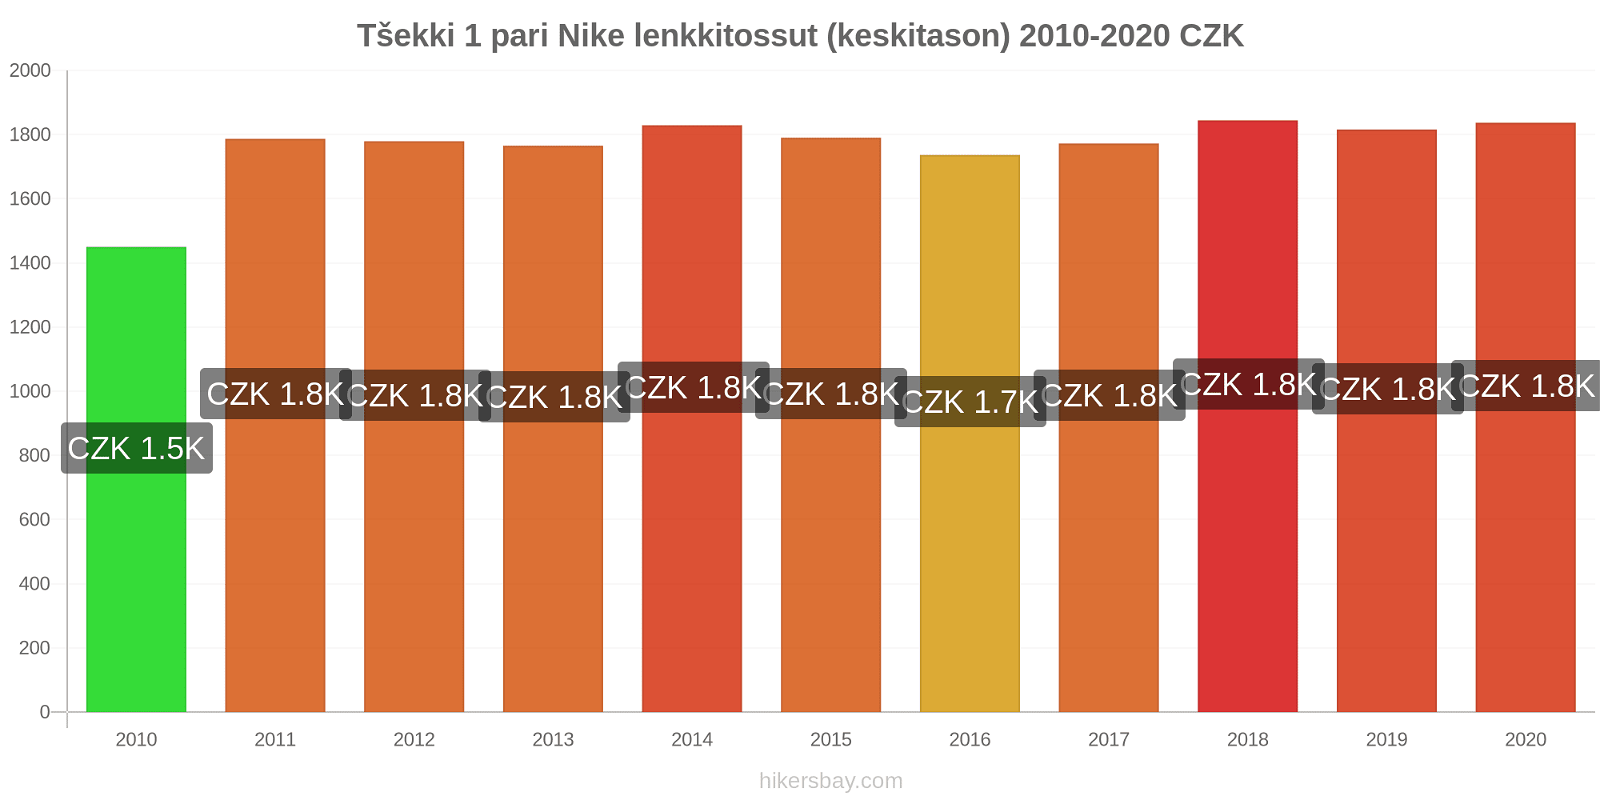 Tšekki hintojen muutokset 1 pari Nike lenkkitossut (keskitason) hikersbay.com